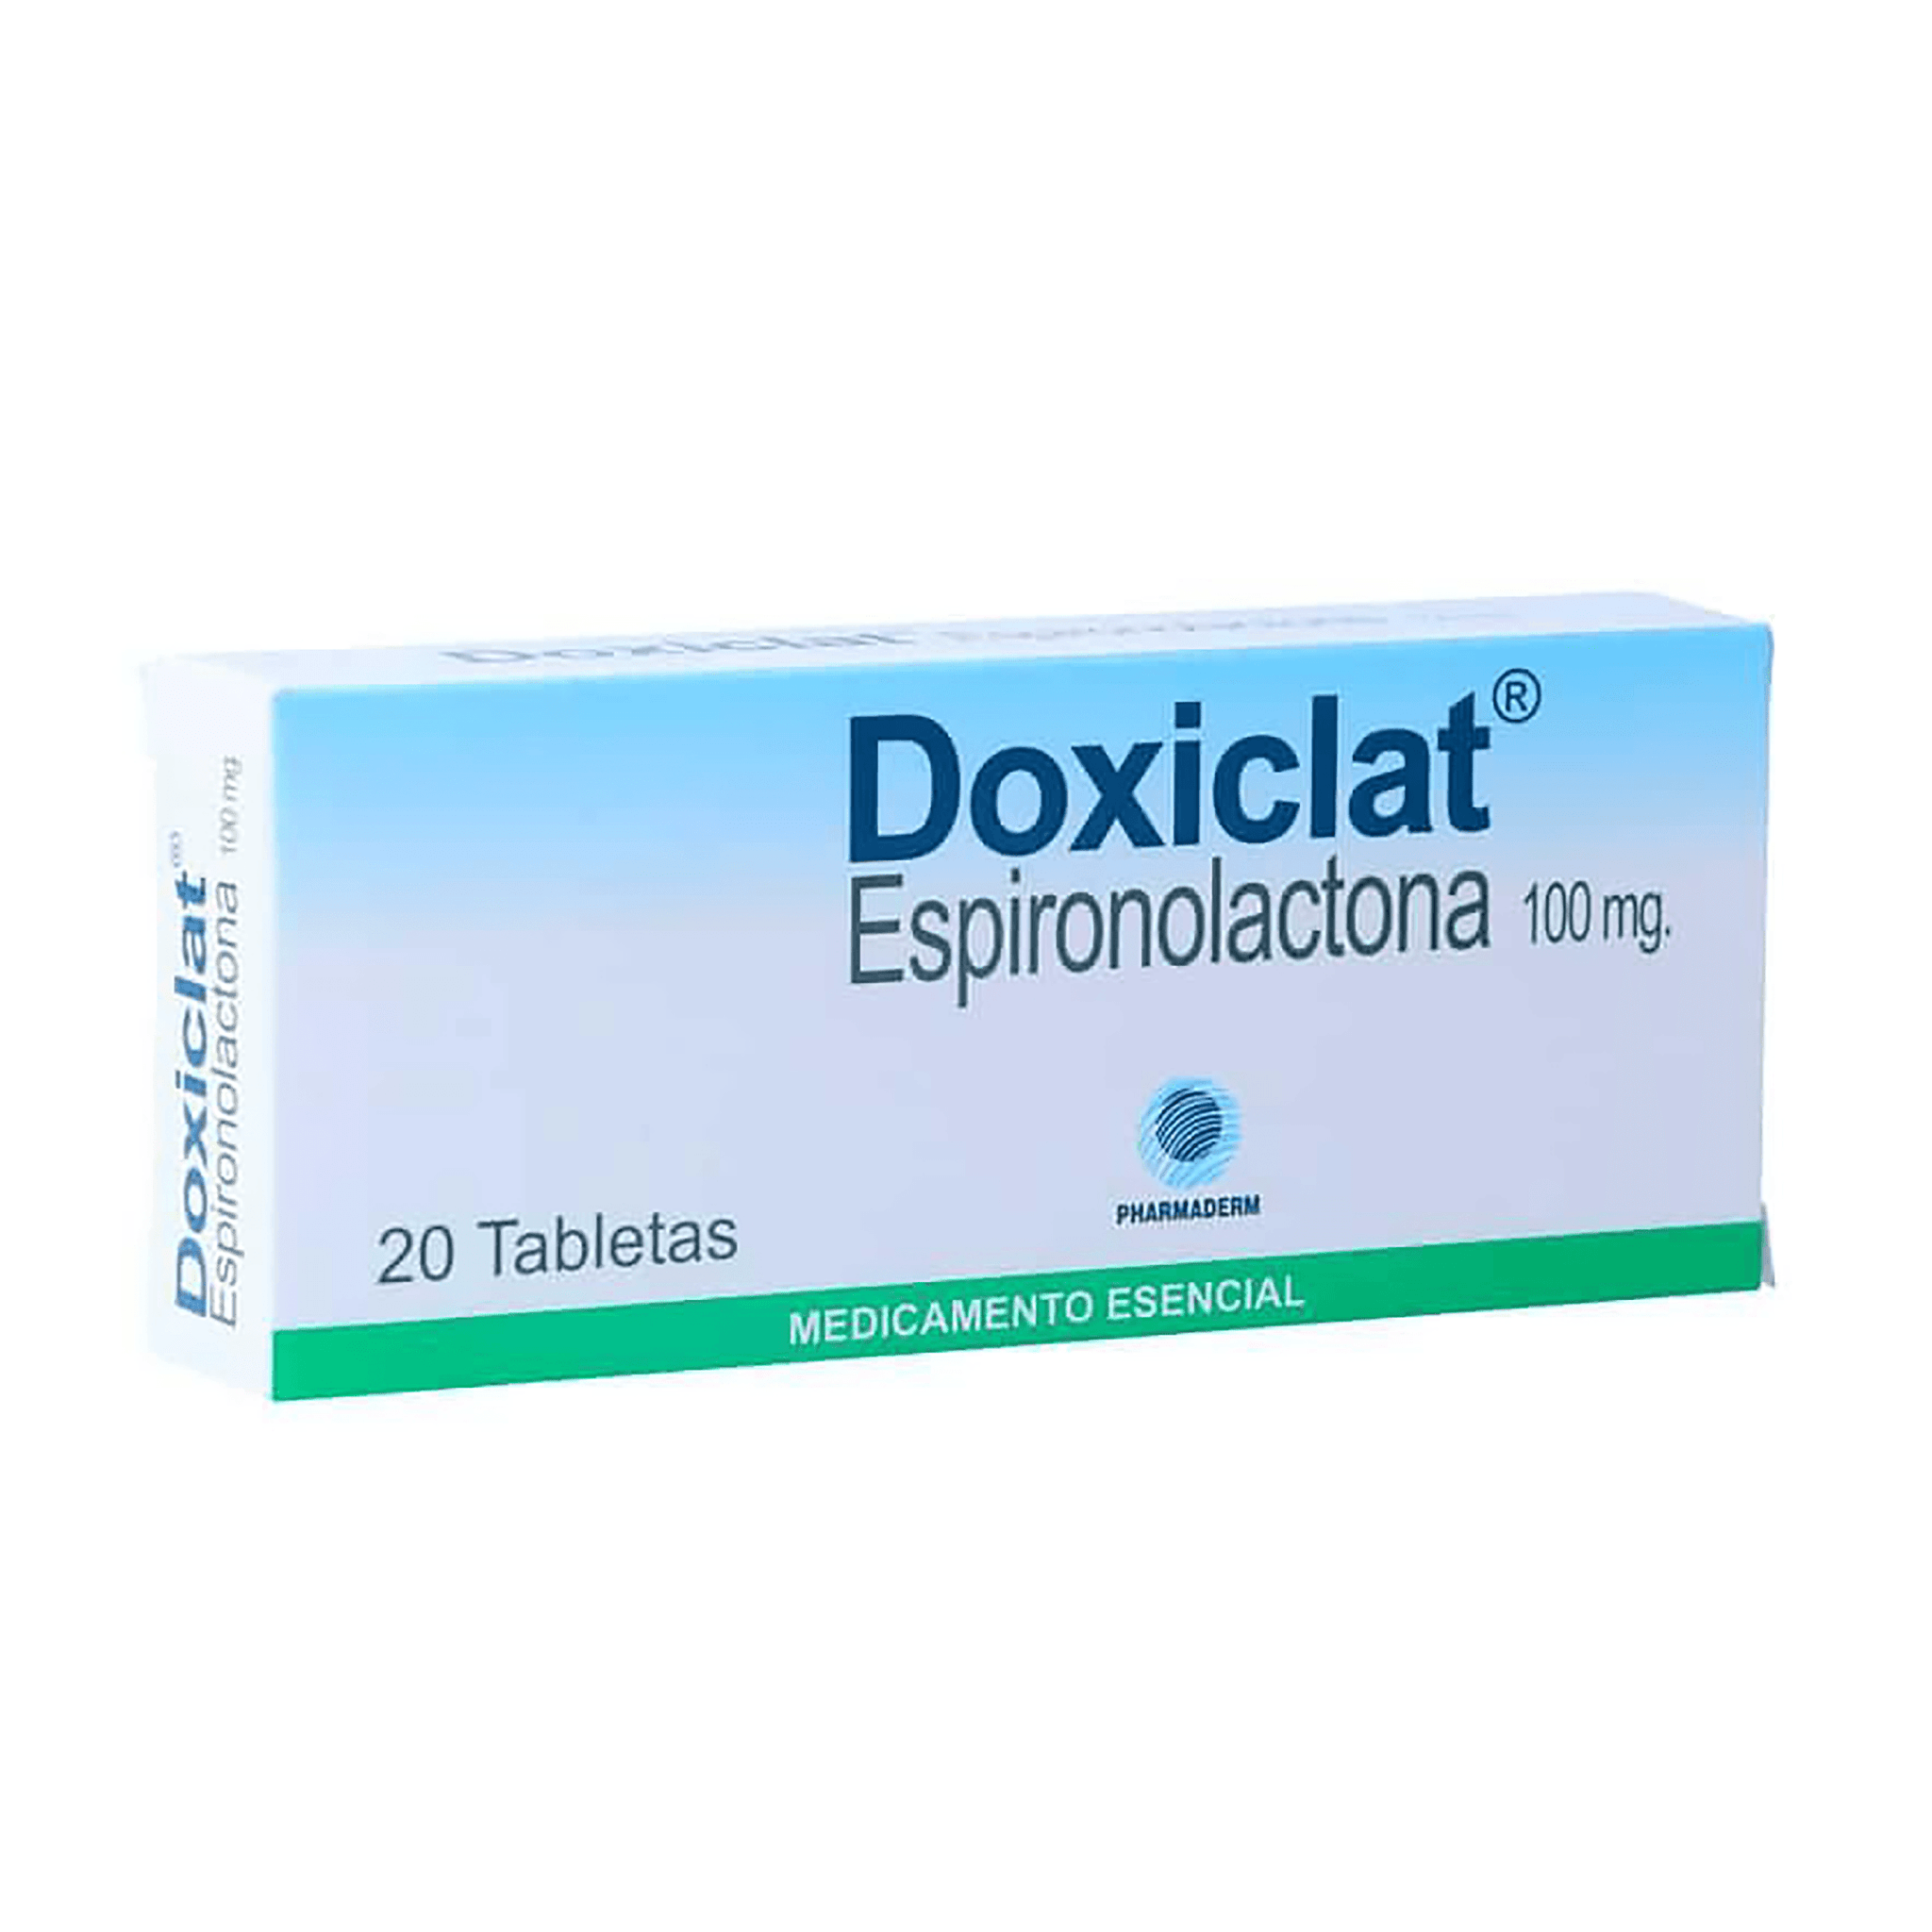 Doxiclat Espironolactona 100mg 20 Tabletas PHARMADERM® - LASKIN